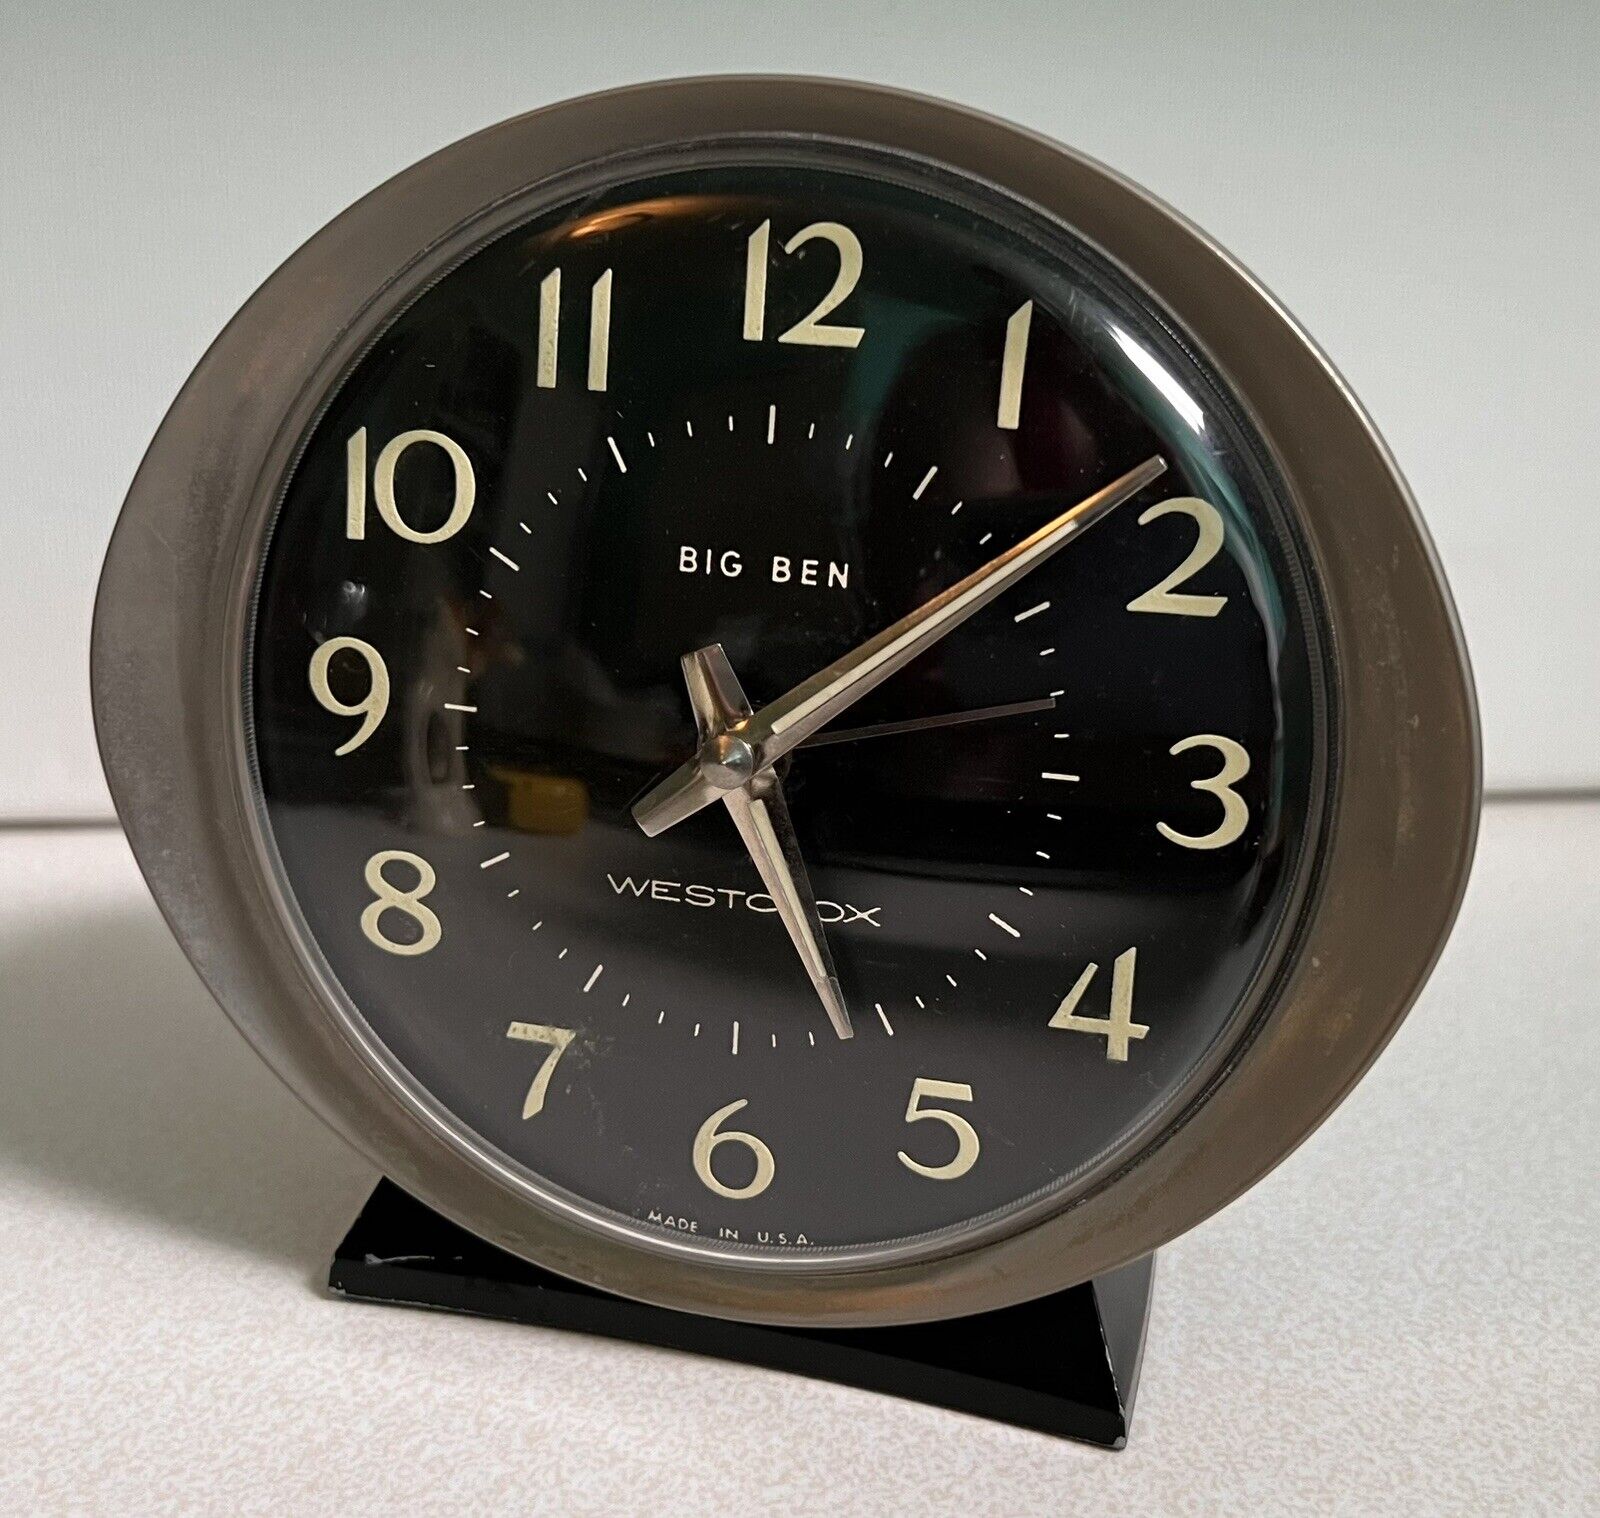 Vintage Westclox Big Ben Wind up Alarm Clock, 3-53647, Tested, Works